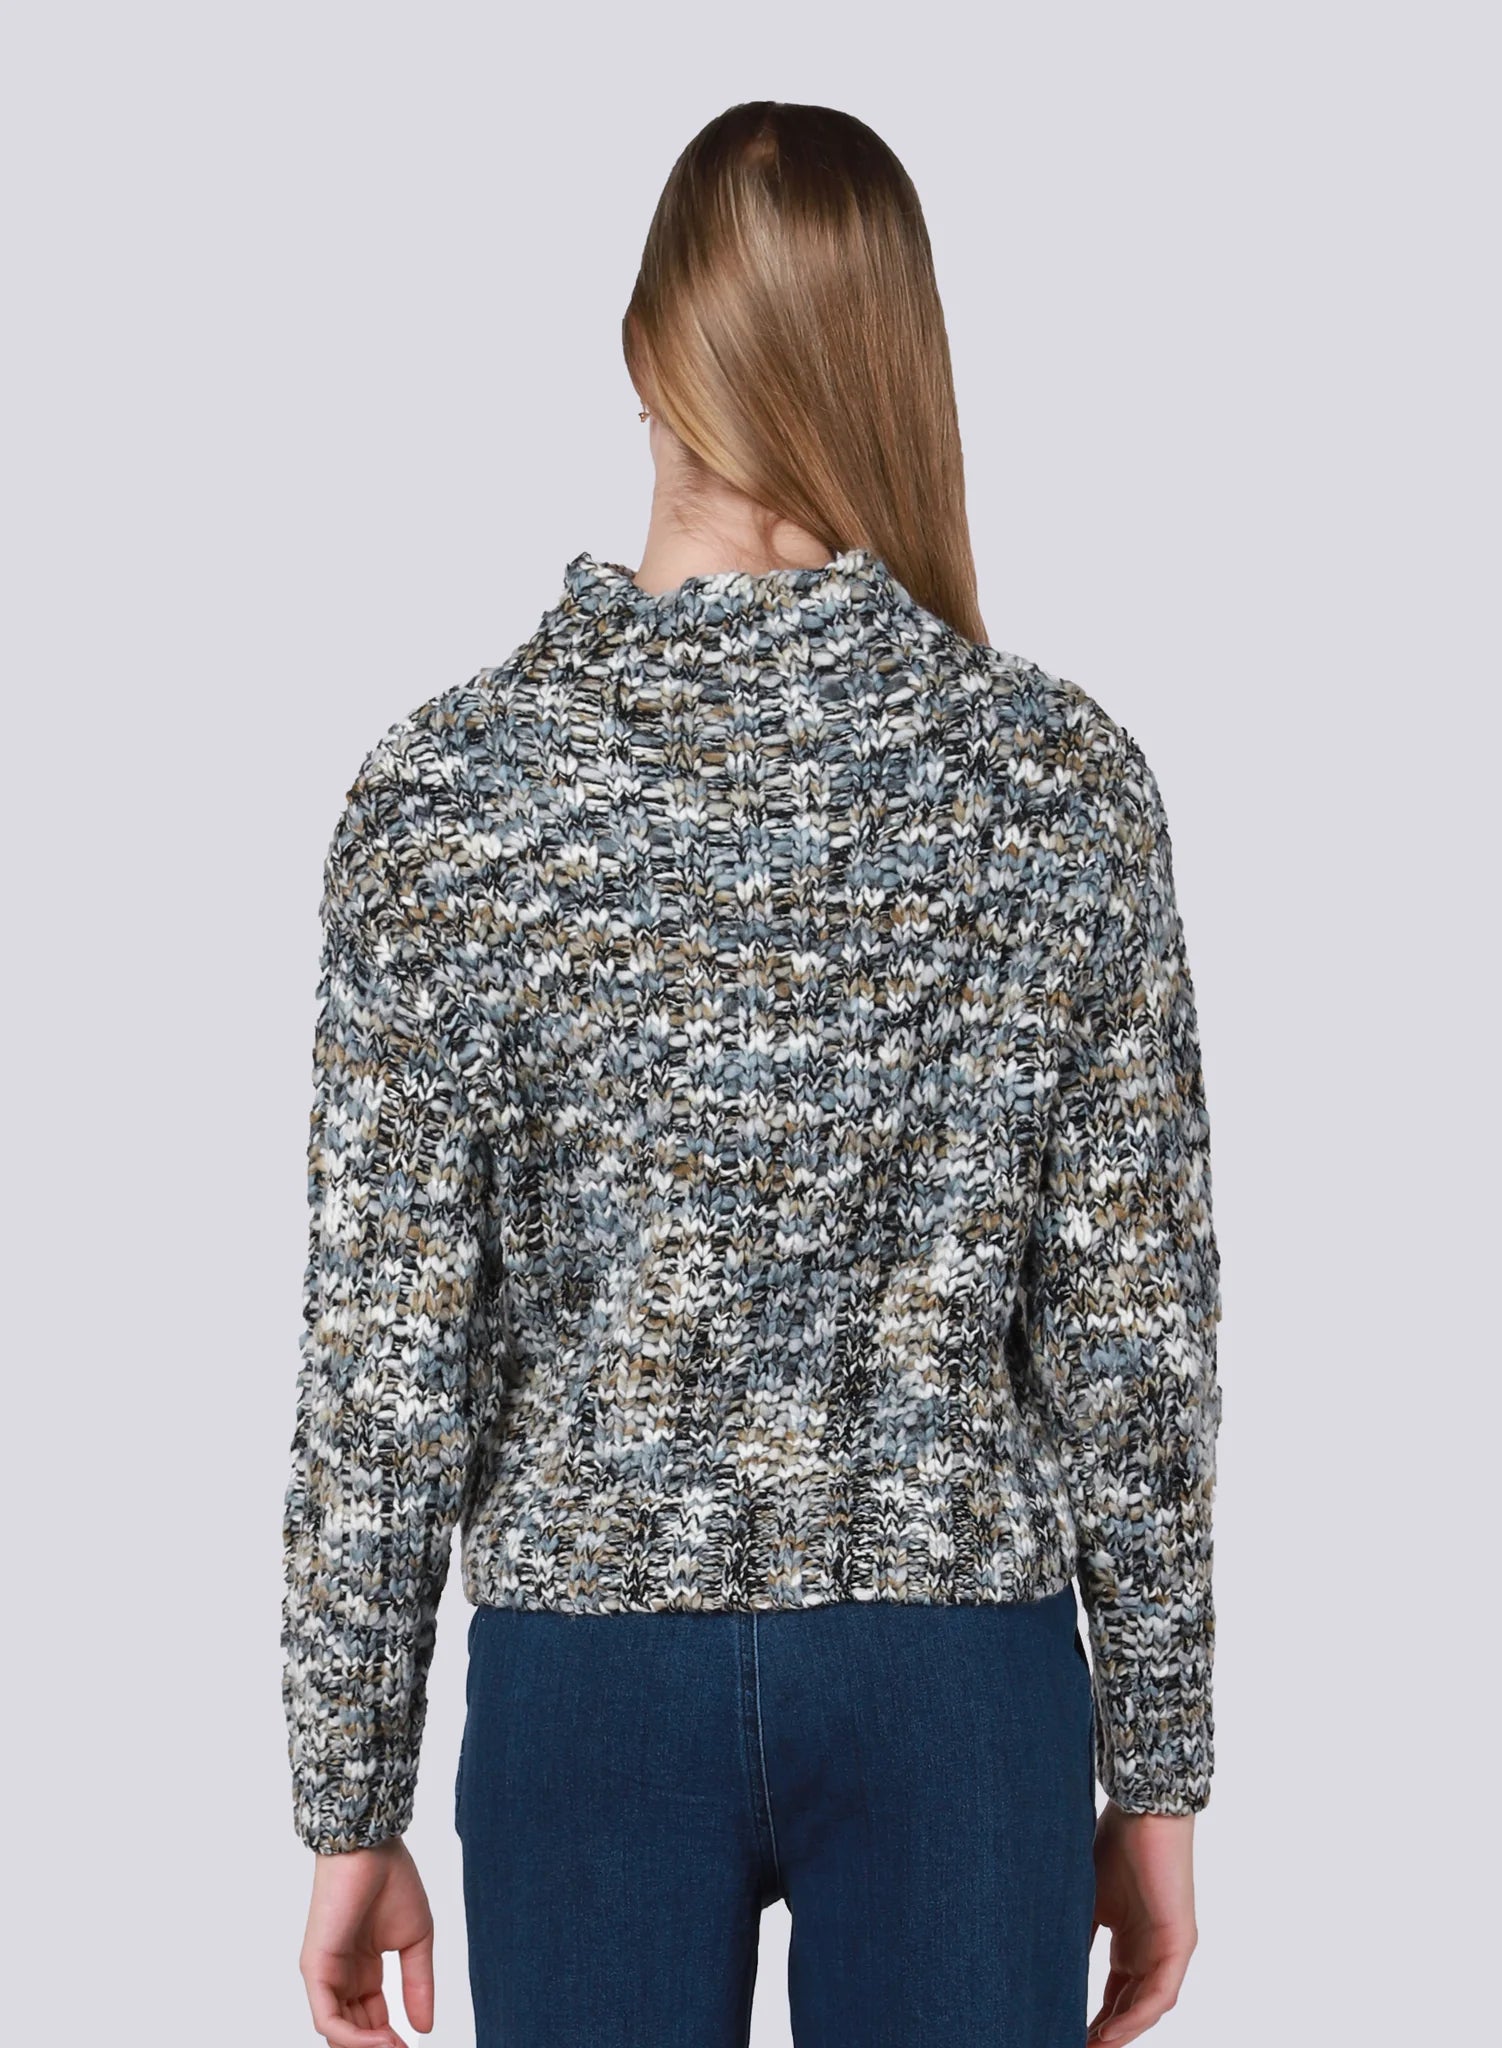 Multi Colored Textured Stitch Sweater